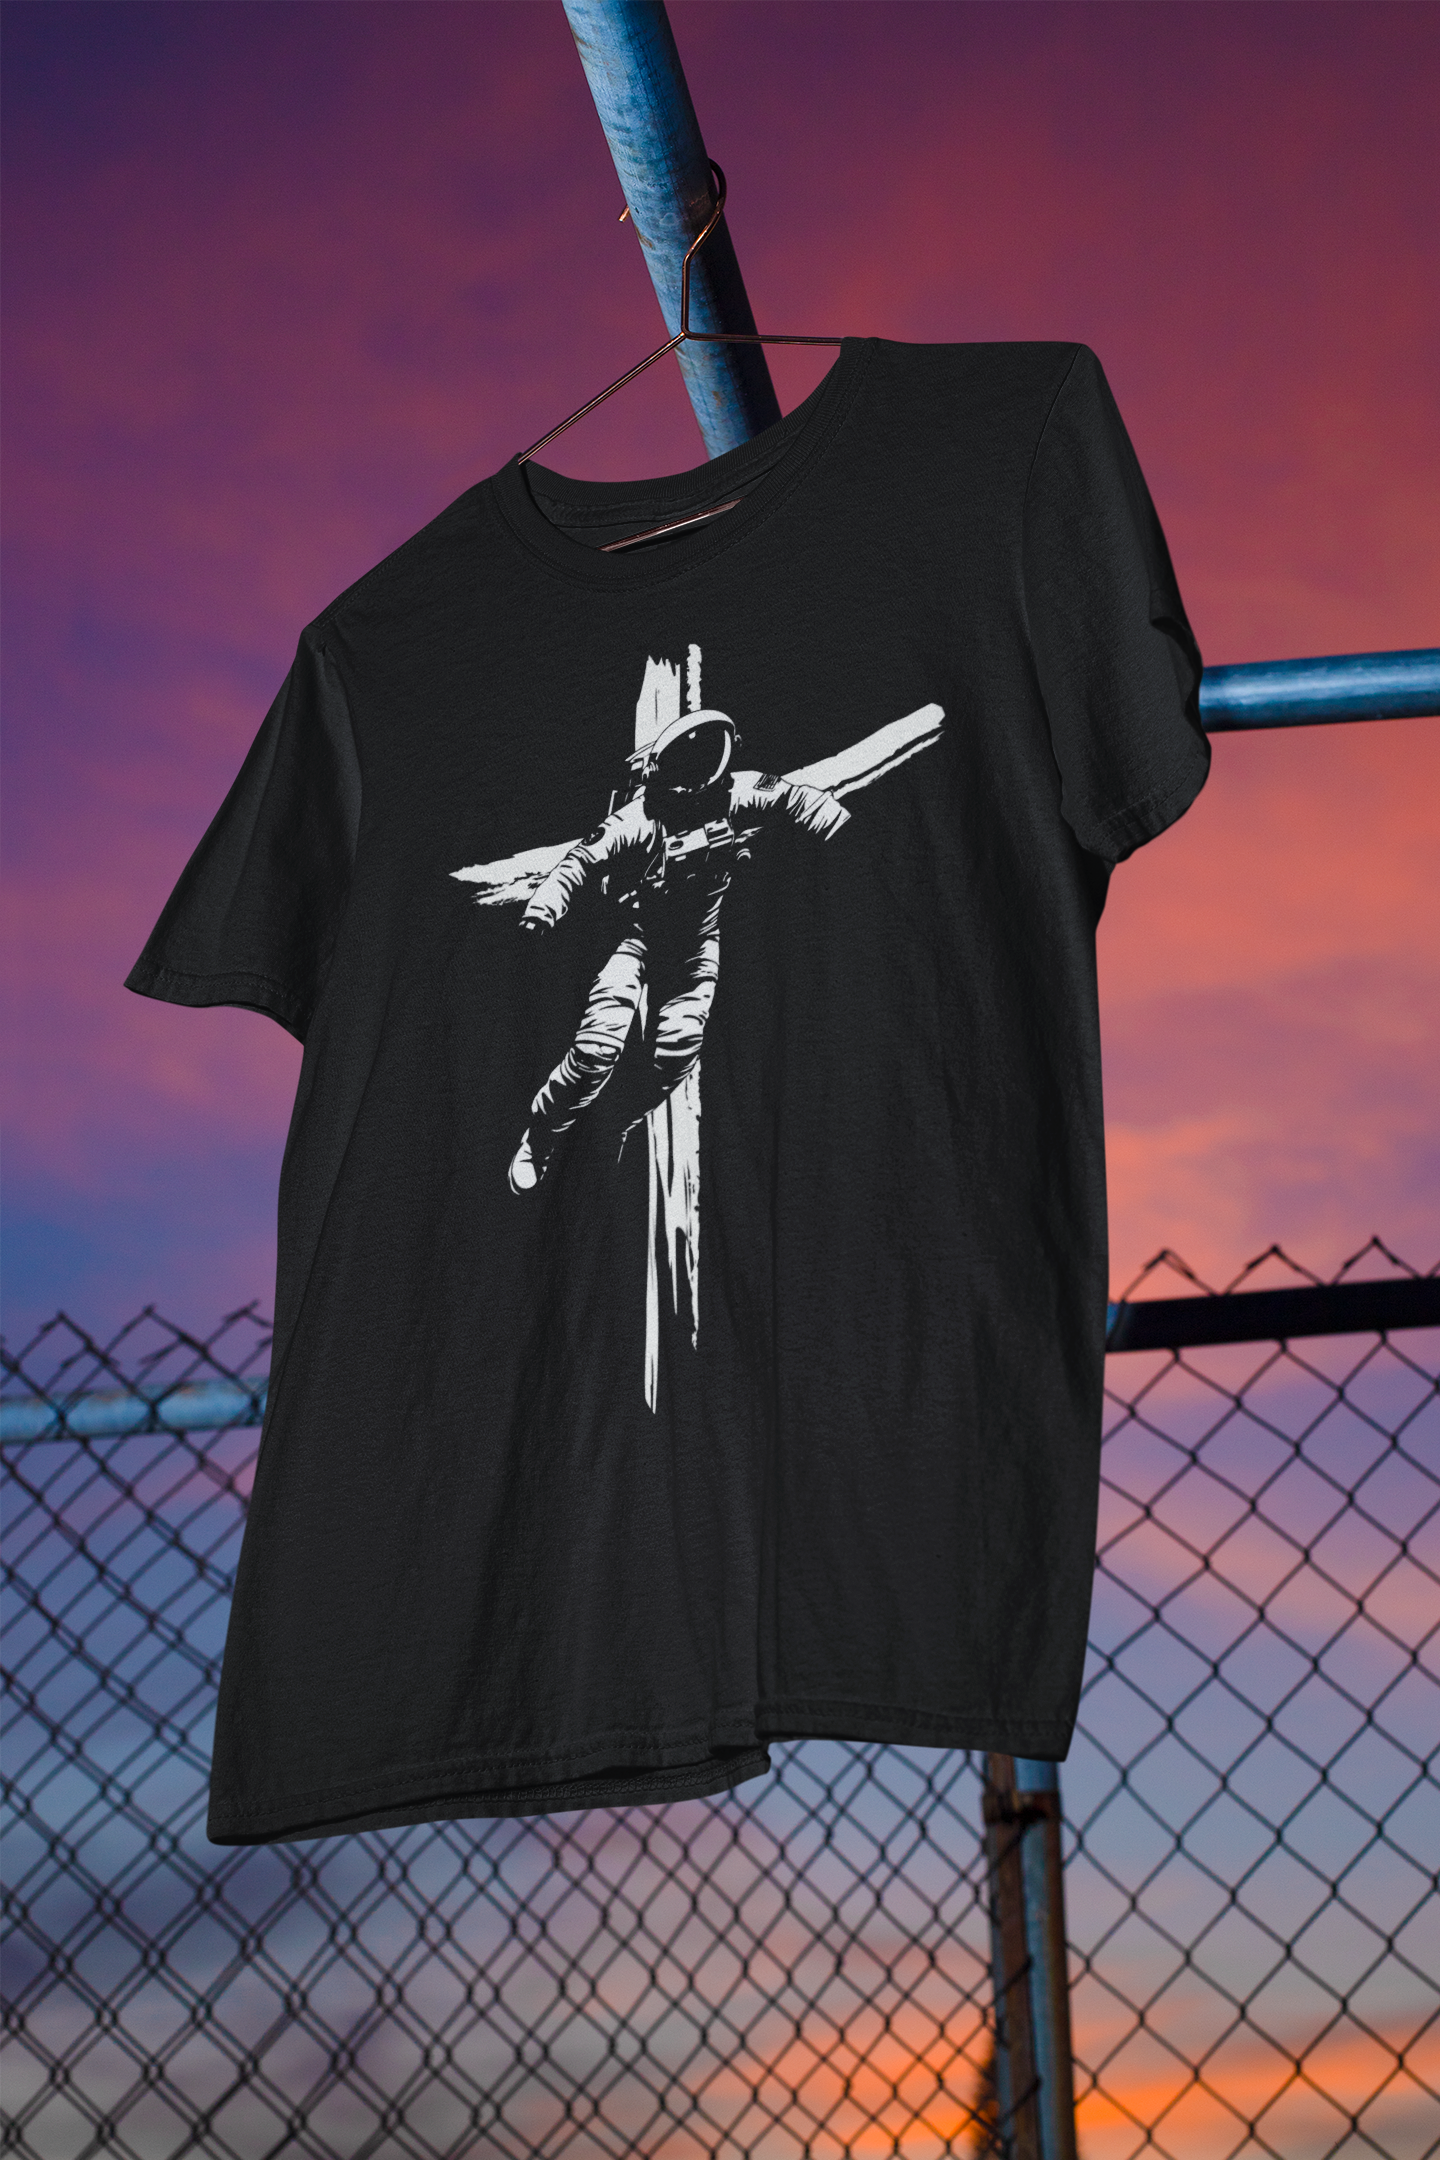 Astronaut Jesus (Modern Savior) T-Shirt